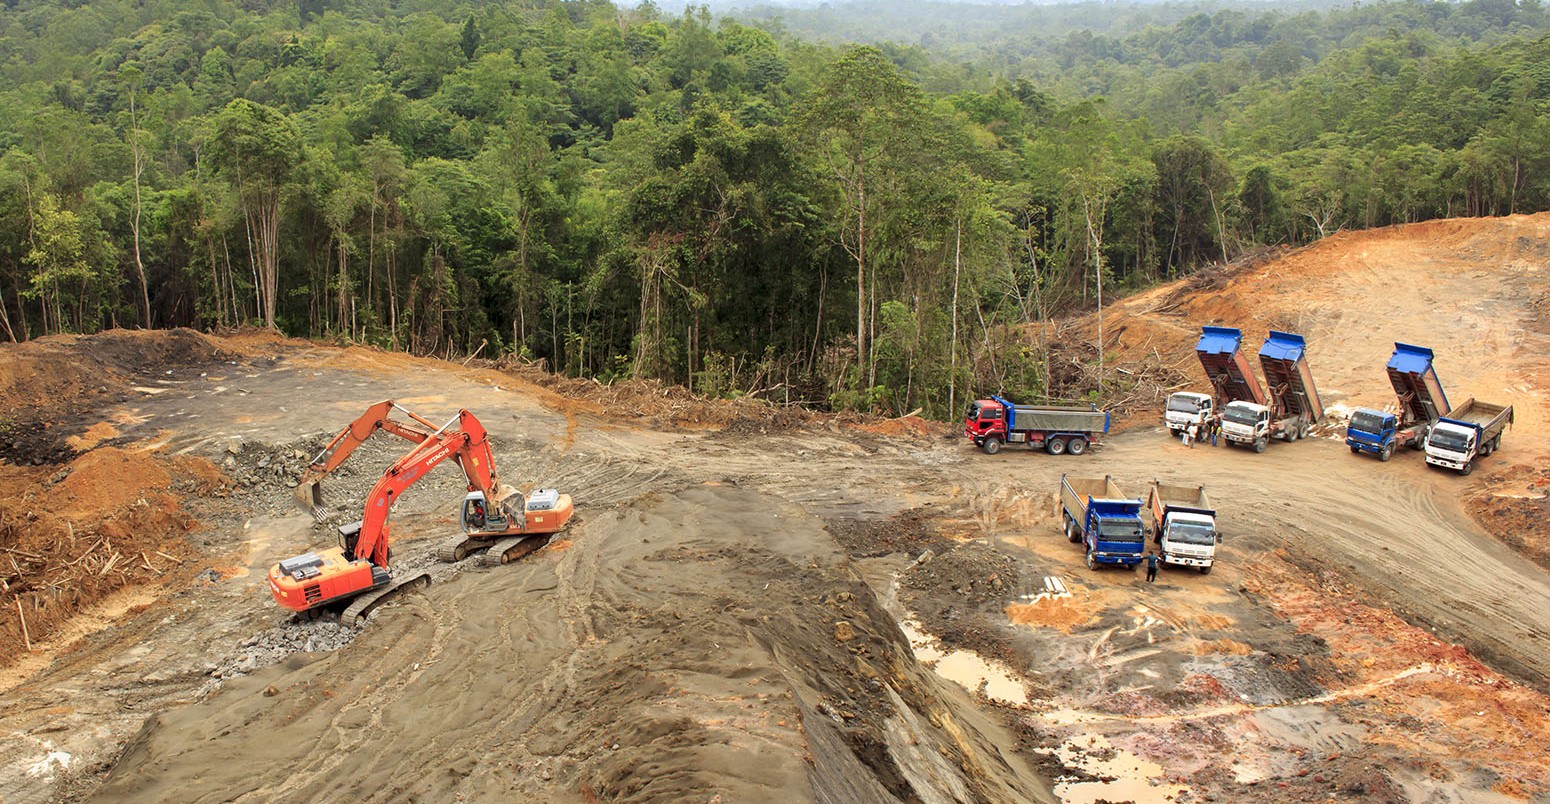 Deforestation of the rainforest in Borneo